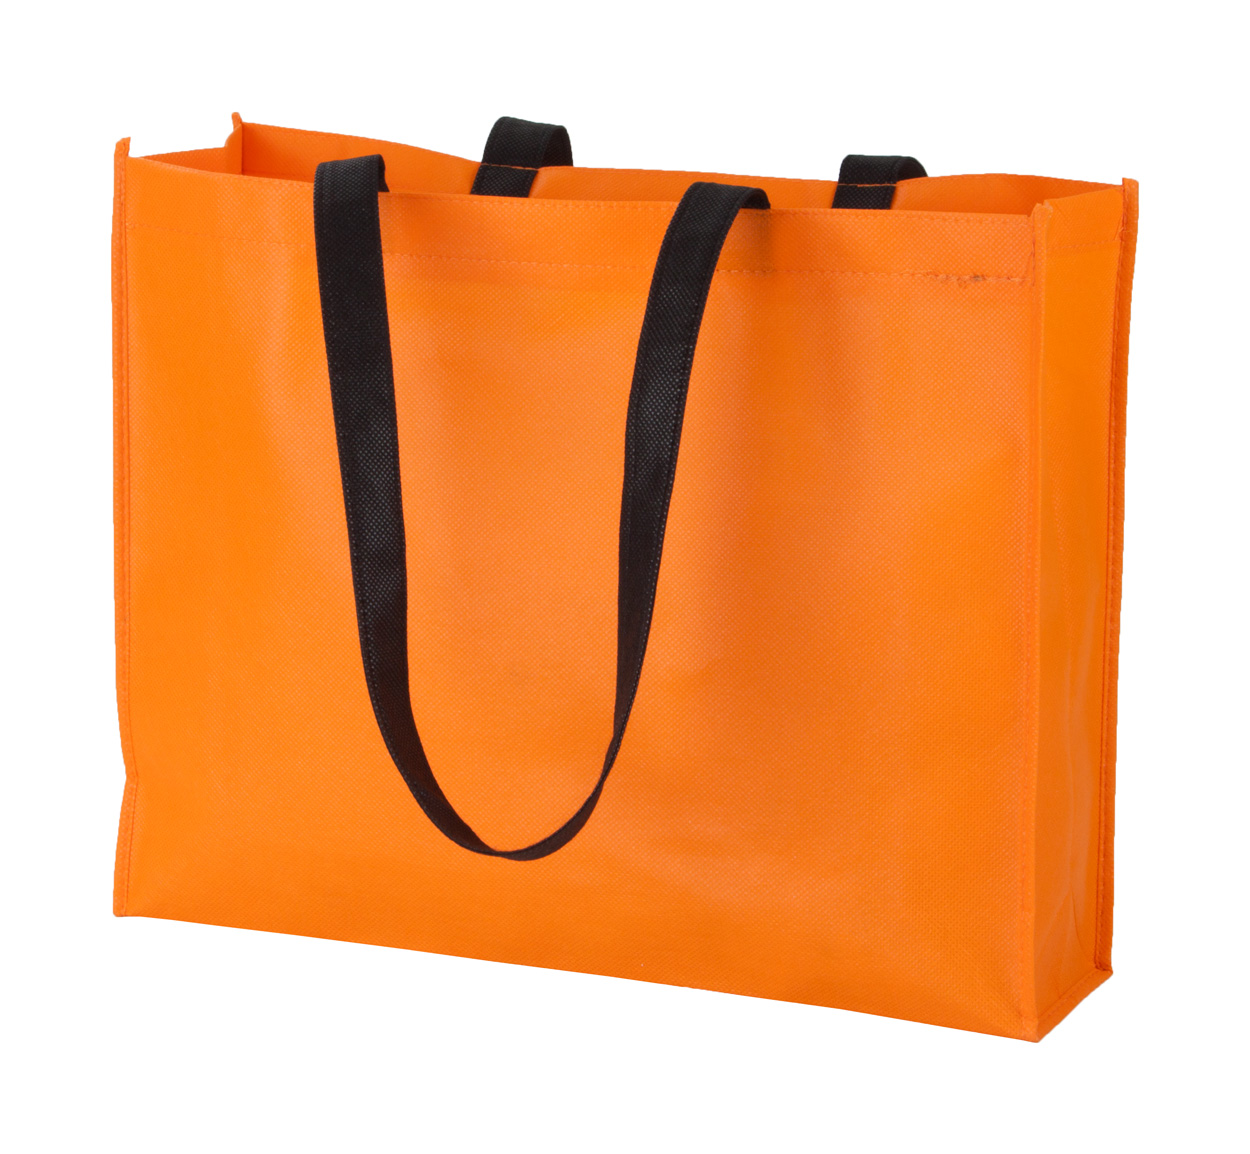 Tucson torba, narančaste boje s logom 